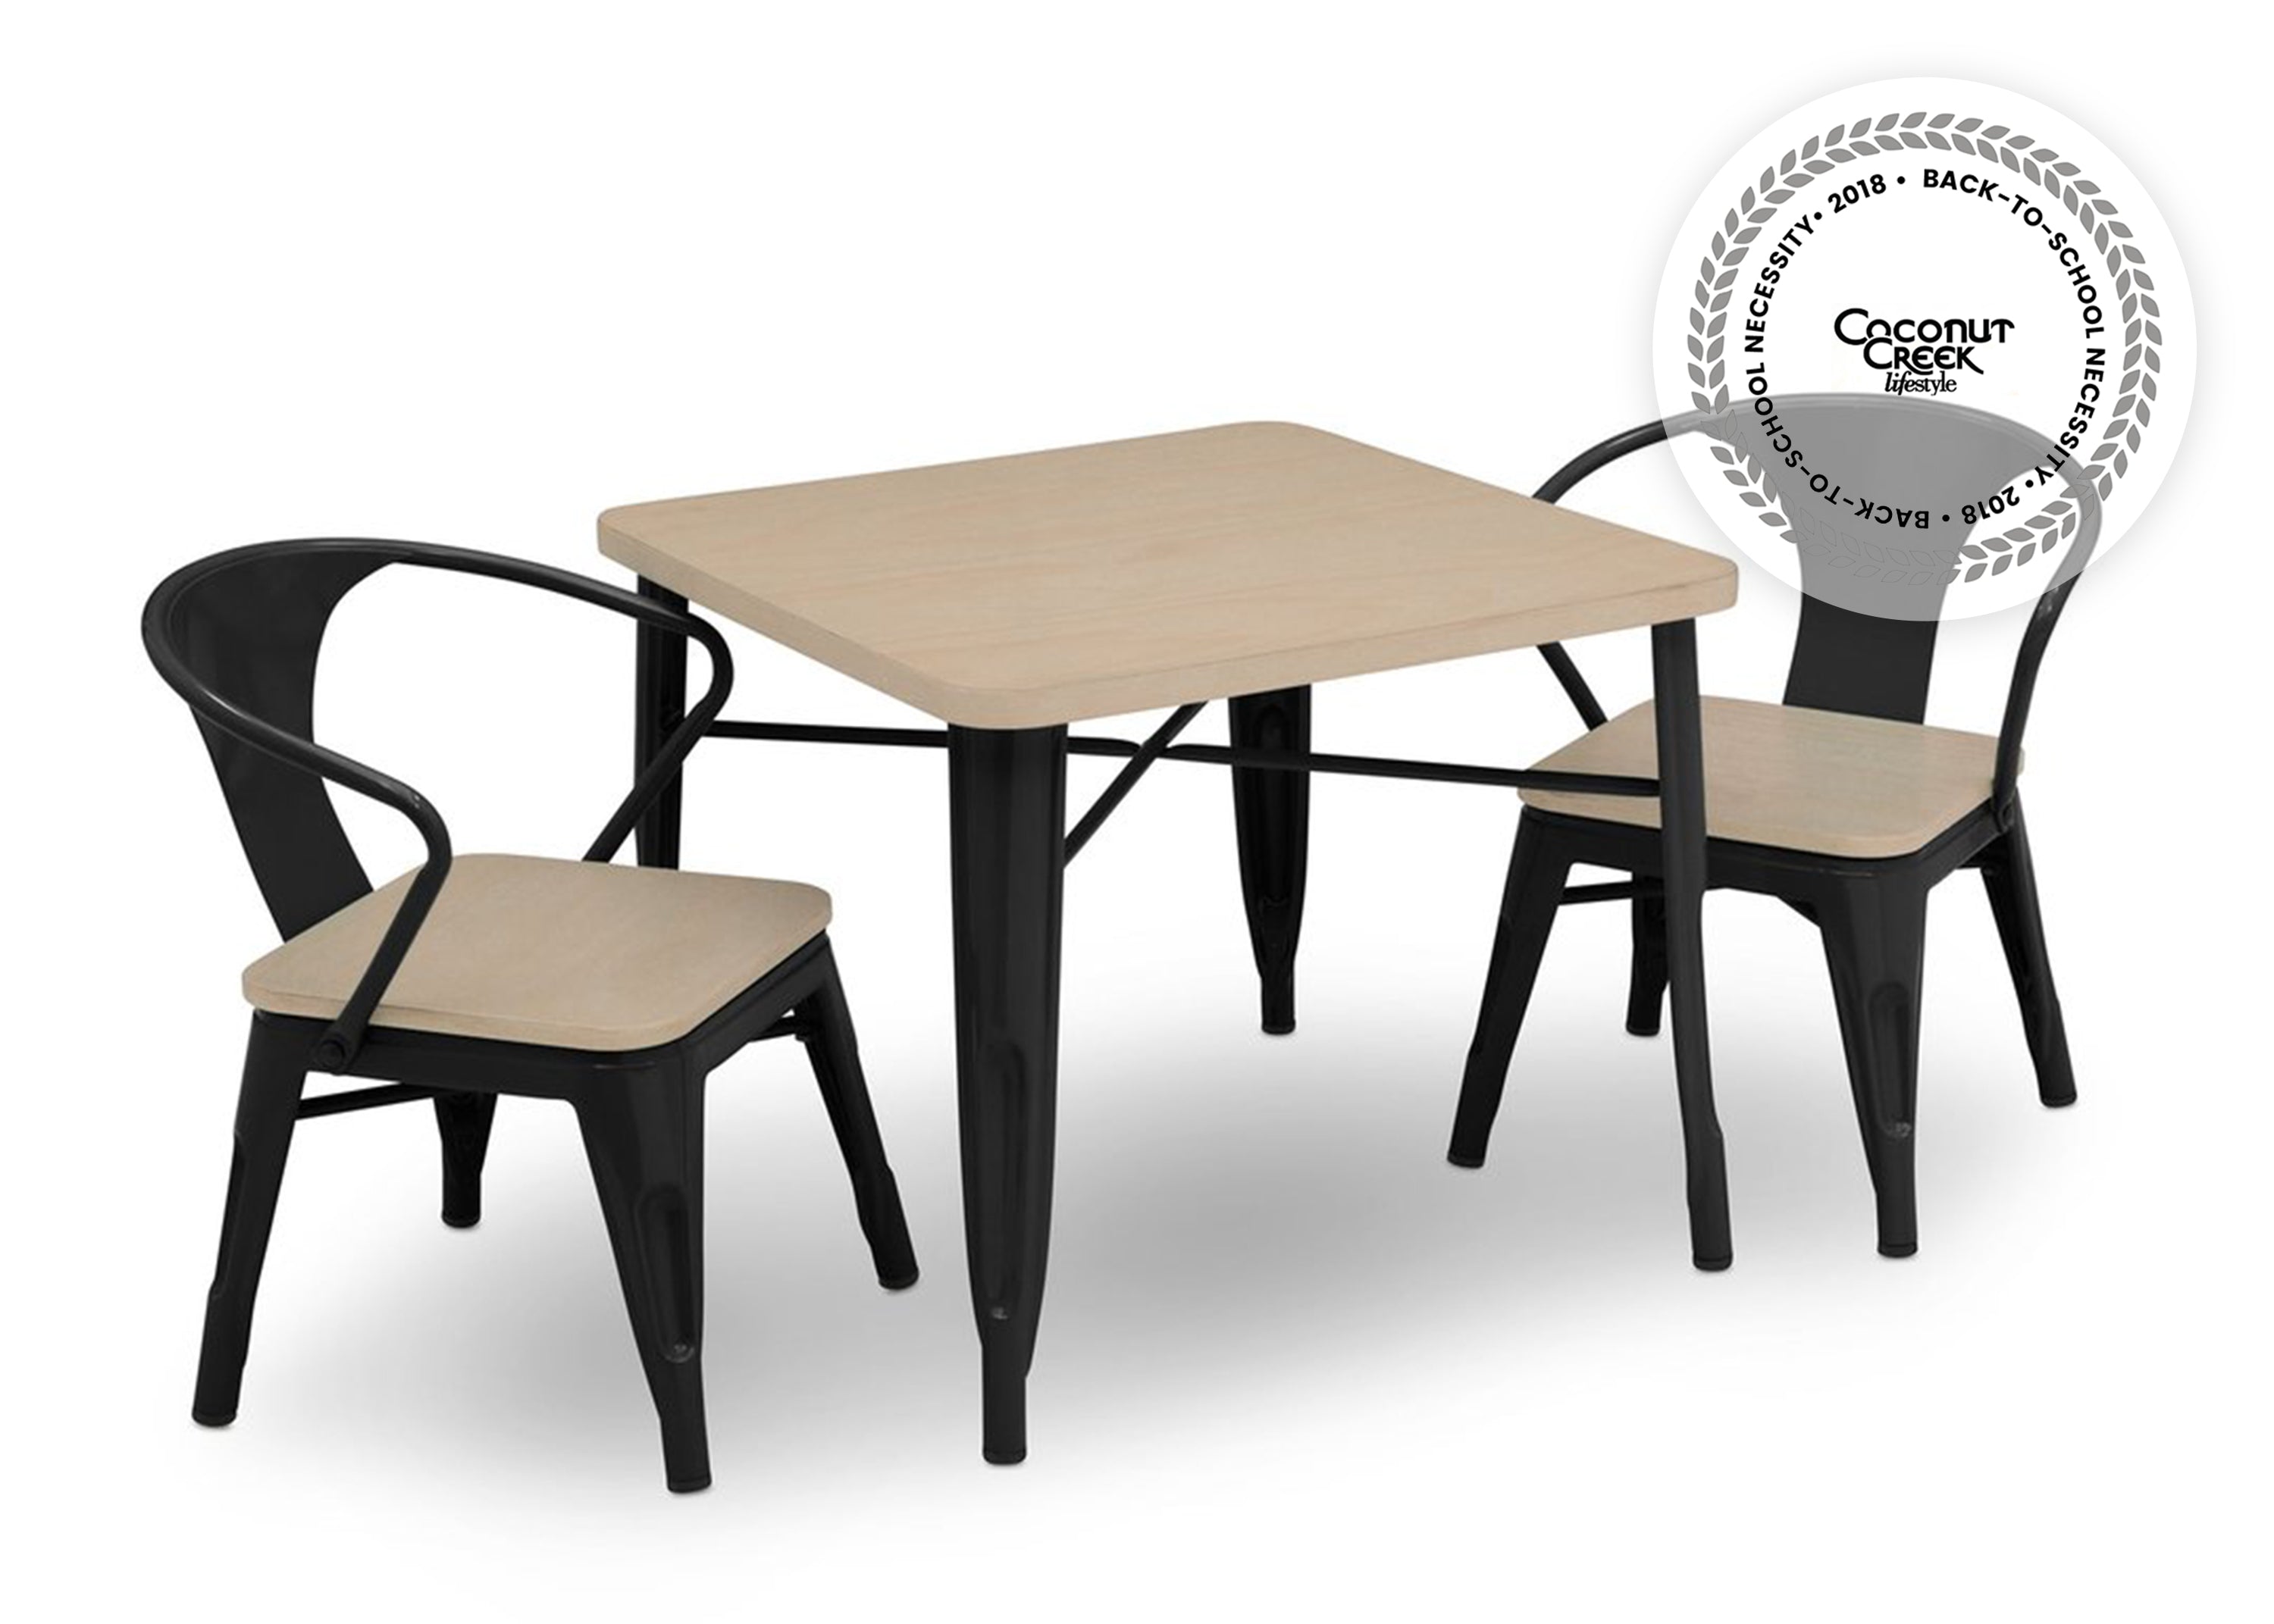 Bistro Table and Chair Set | Delta Children